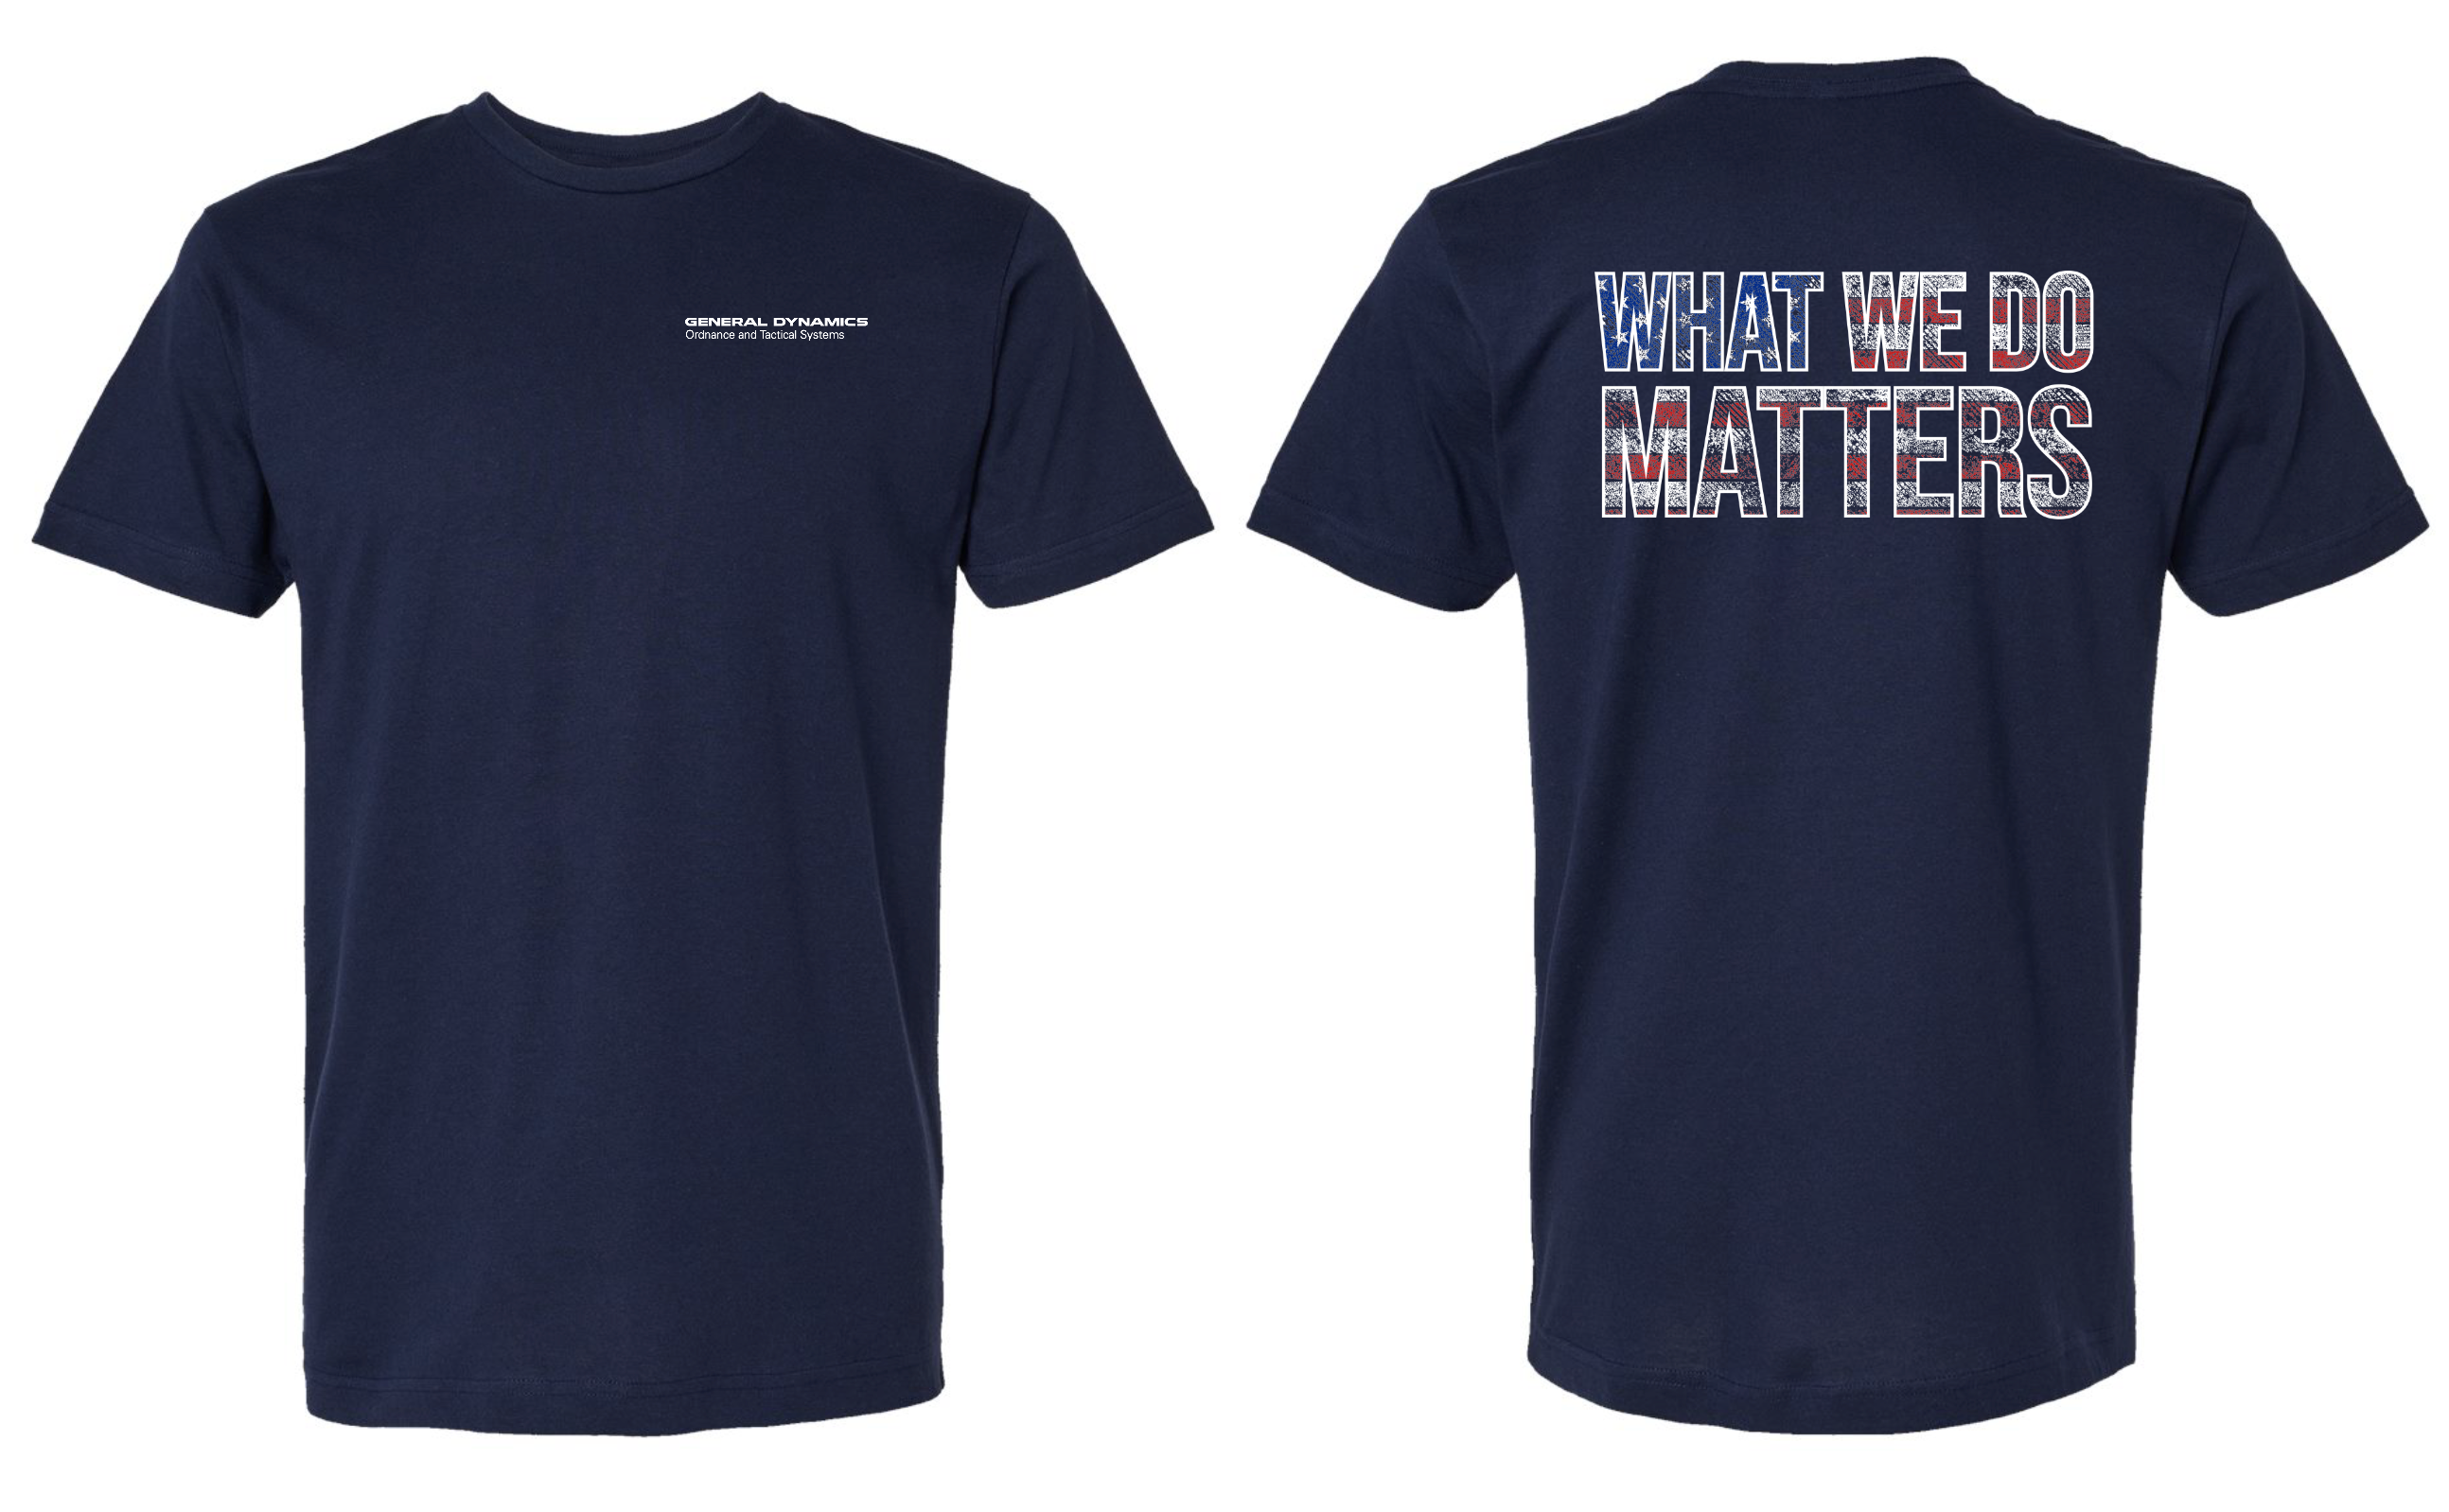 General Dynamics Short or Long Sleeve Navy T-Shirt